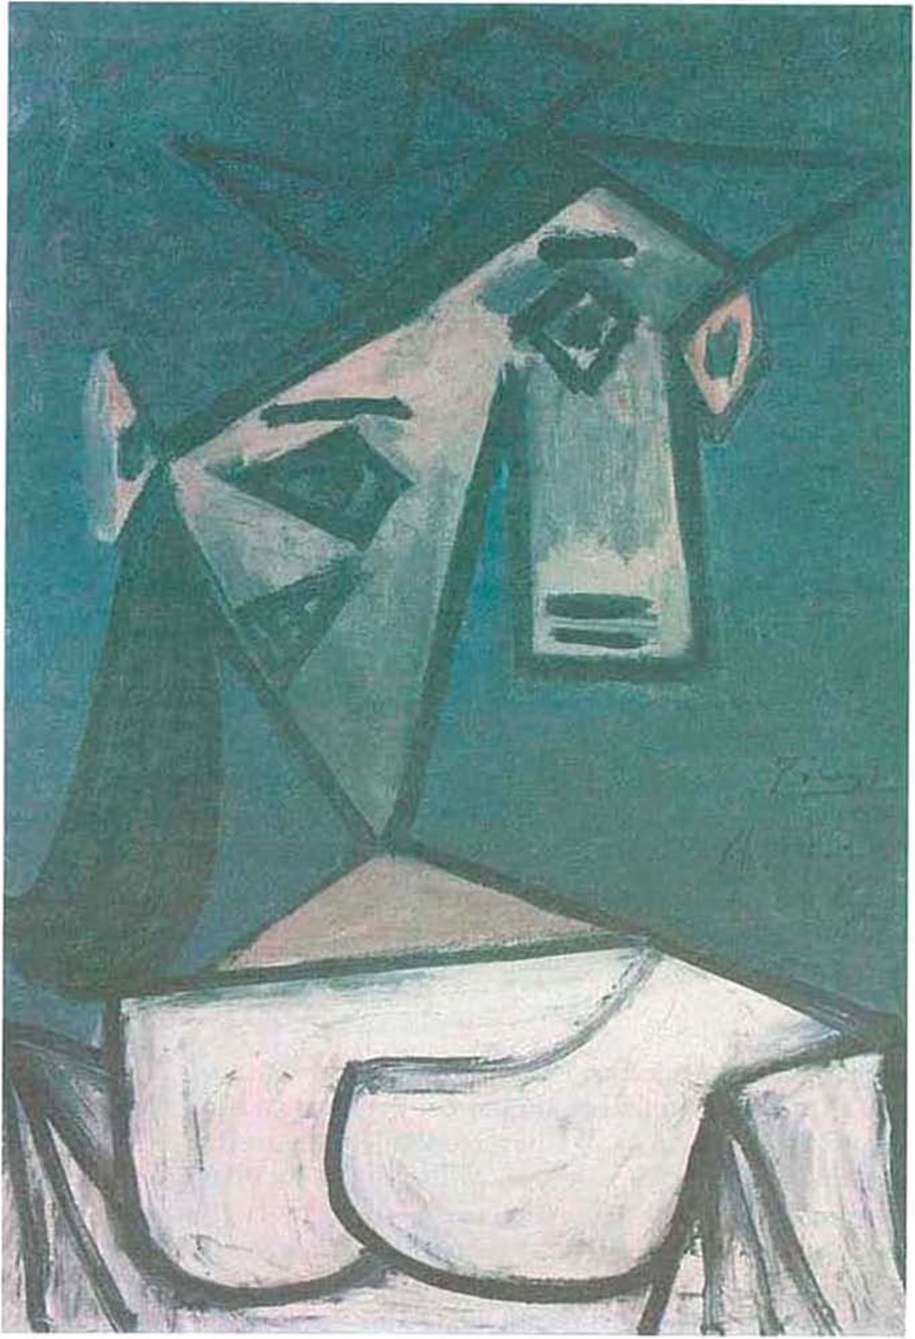 Pablo Picasso (1881-1973), «Προσωπογραφία κοριτσιού». Μέρος της δωρεάς έργων διάσημων Γάλλων καλλιτεχνών στην Εθνική Πινακοθήκη «σε ένδειξη αγάπης και θαυμασμού για την ηρωική στάση του ελληνικού λαού στον πόλεμο και την αντίσταση 1940-44» (1946).